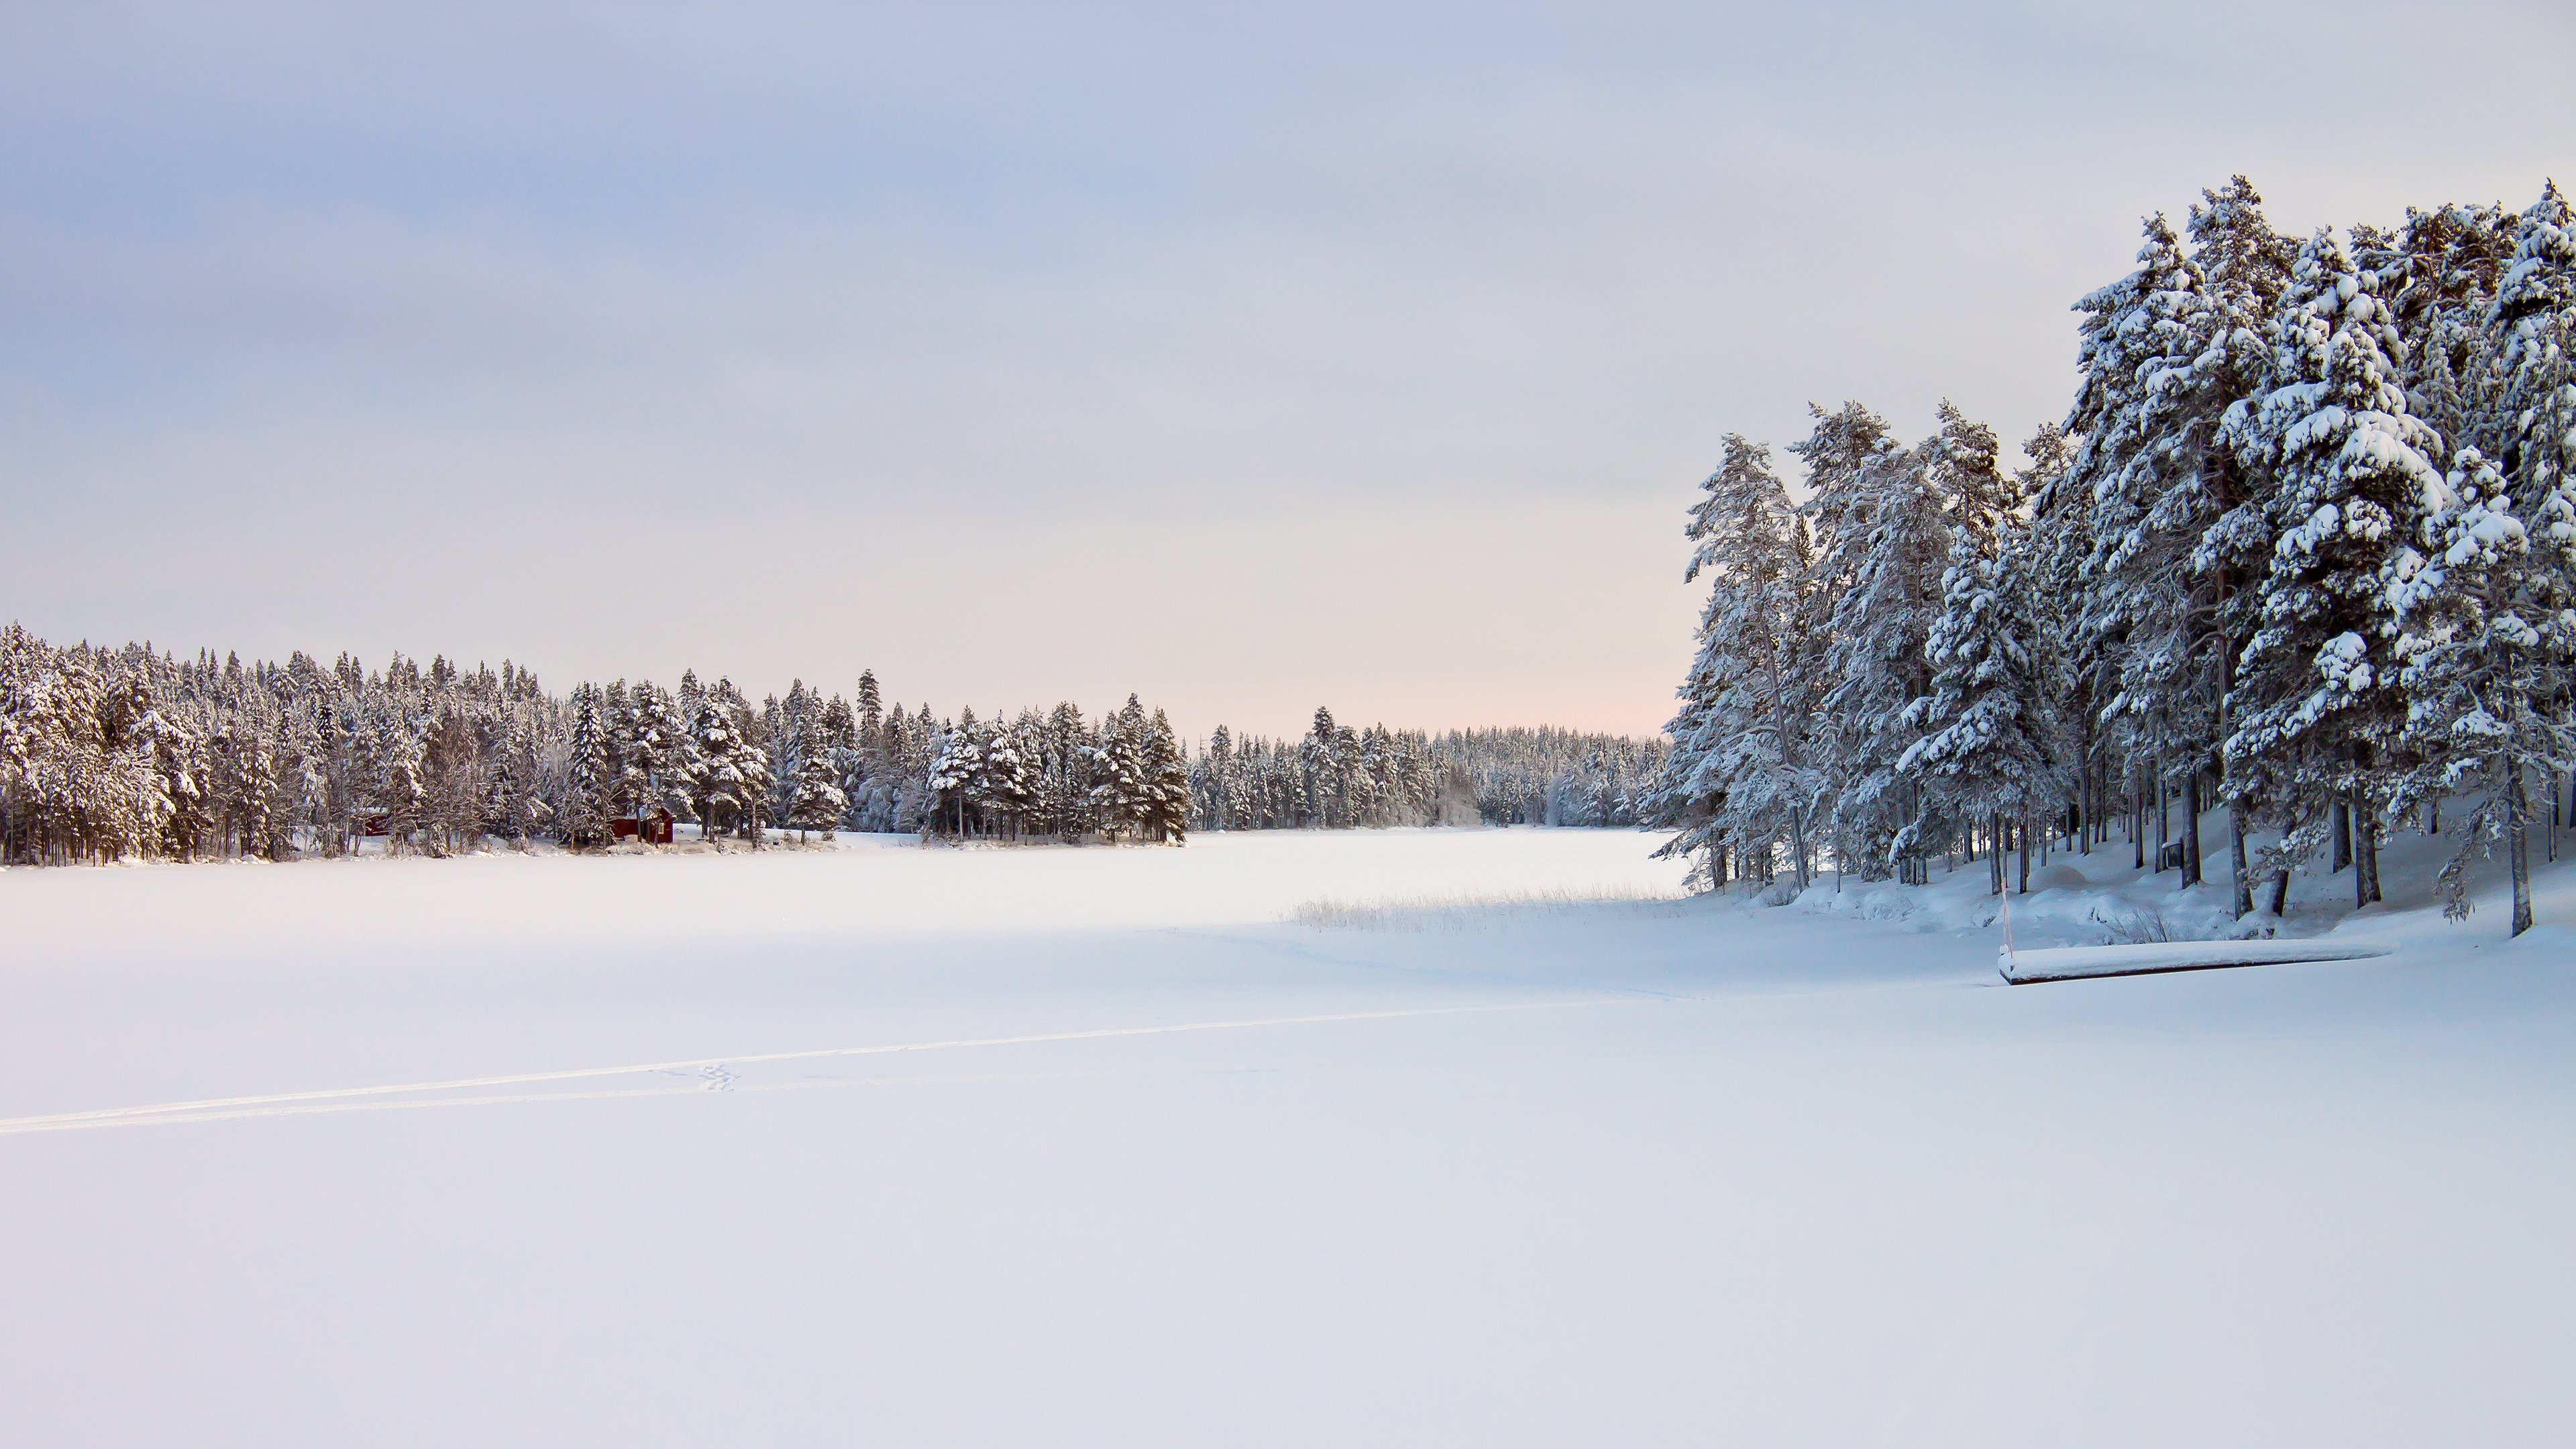 Landscape in snow wallpaper 3840x2160 276106 WallpaperUP